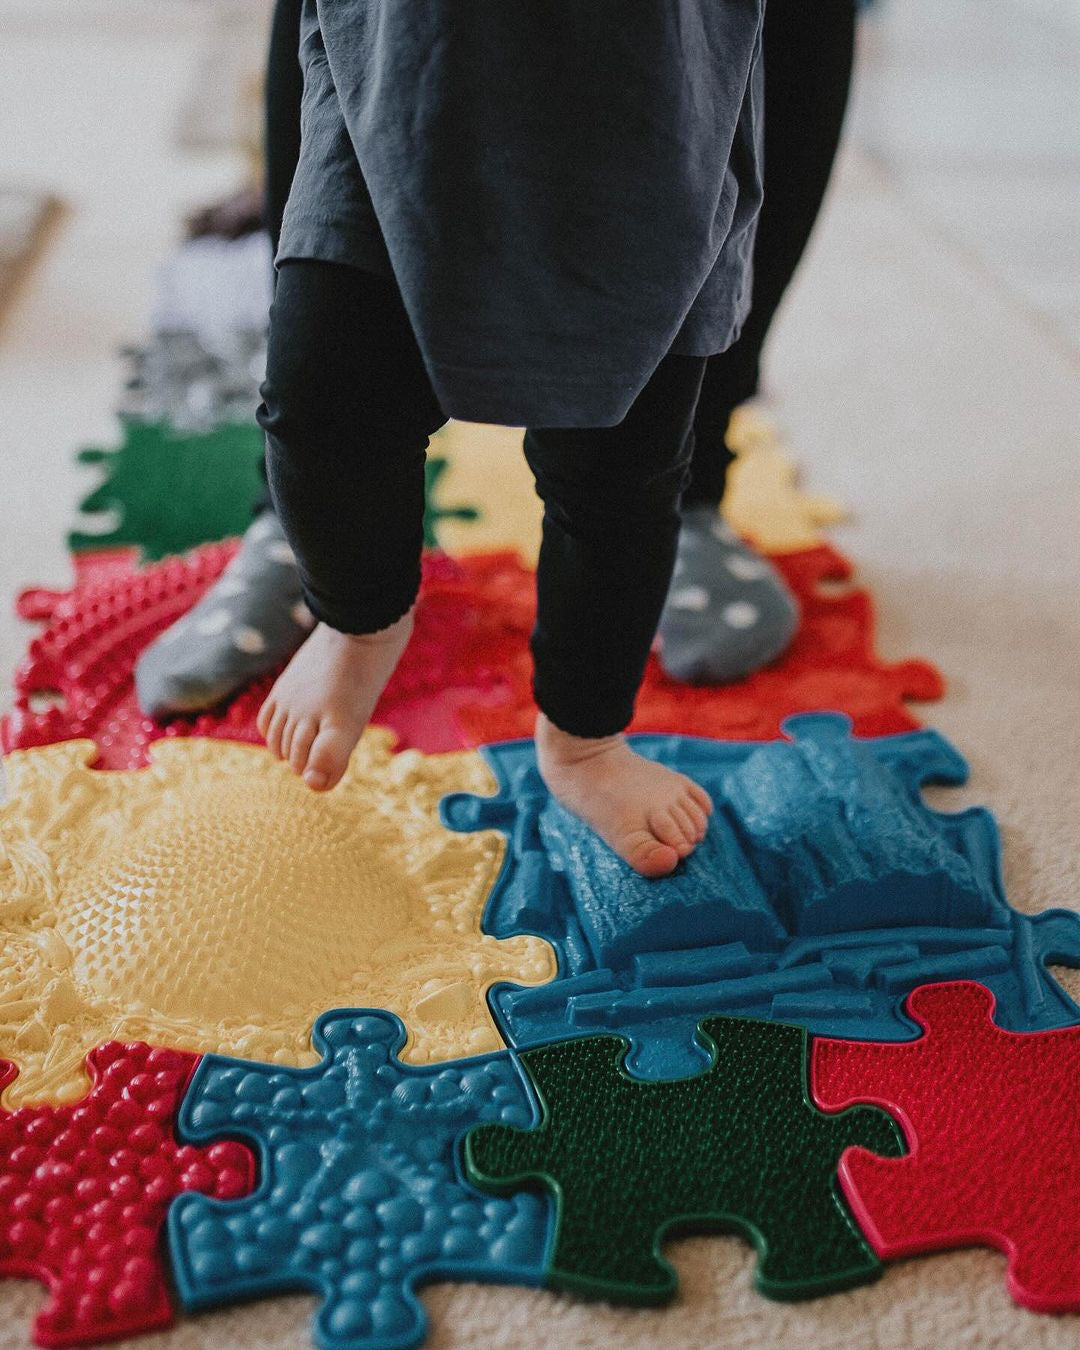 The importance of sensory play and barefoot stimulation